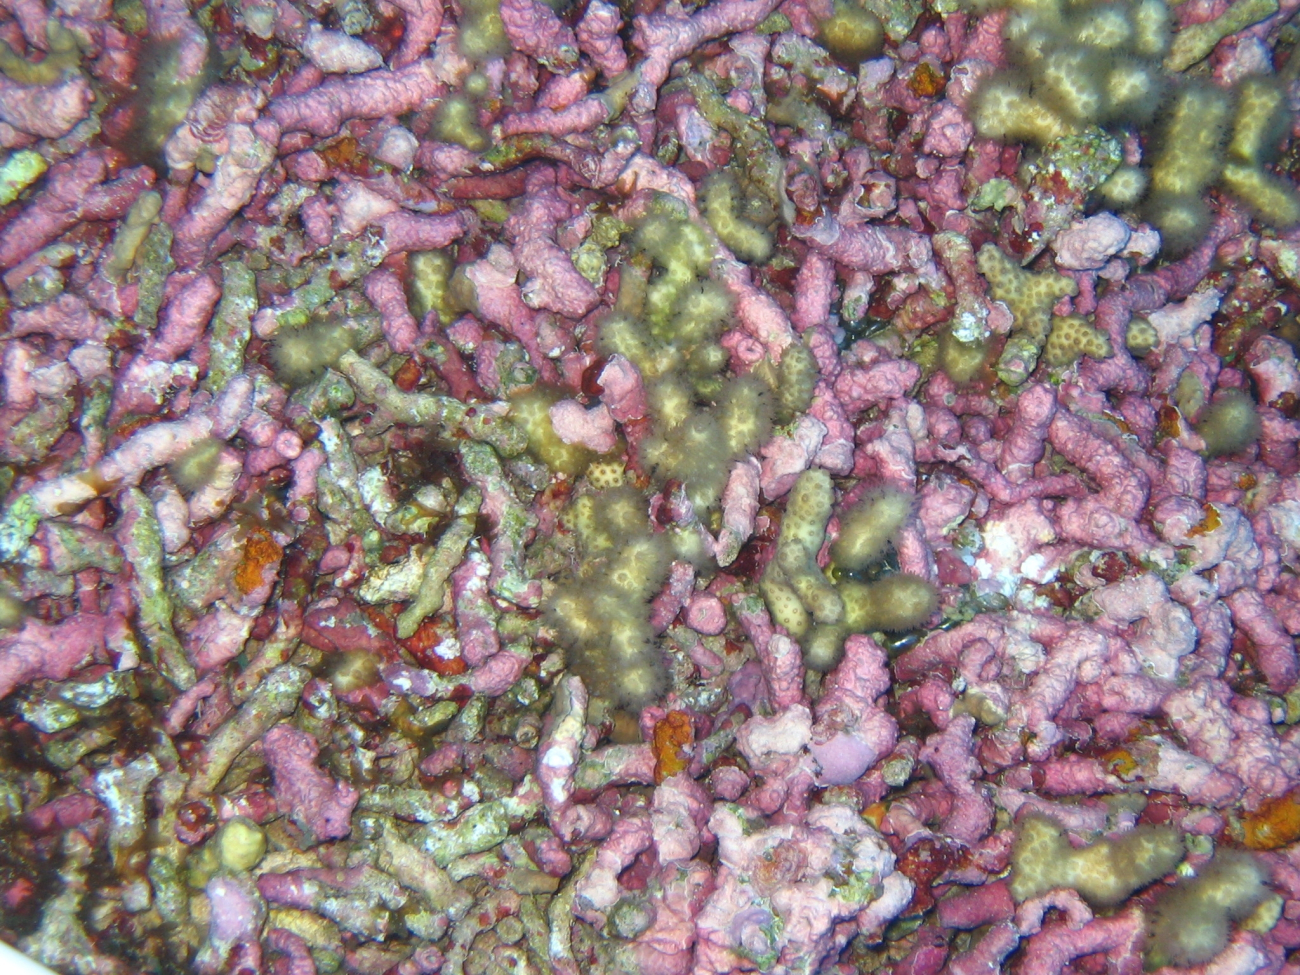 Yellow pencil coral (Madracis mirabilis) and crustose coralline algae (Rhodohyta sp